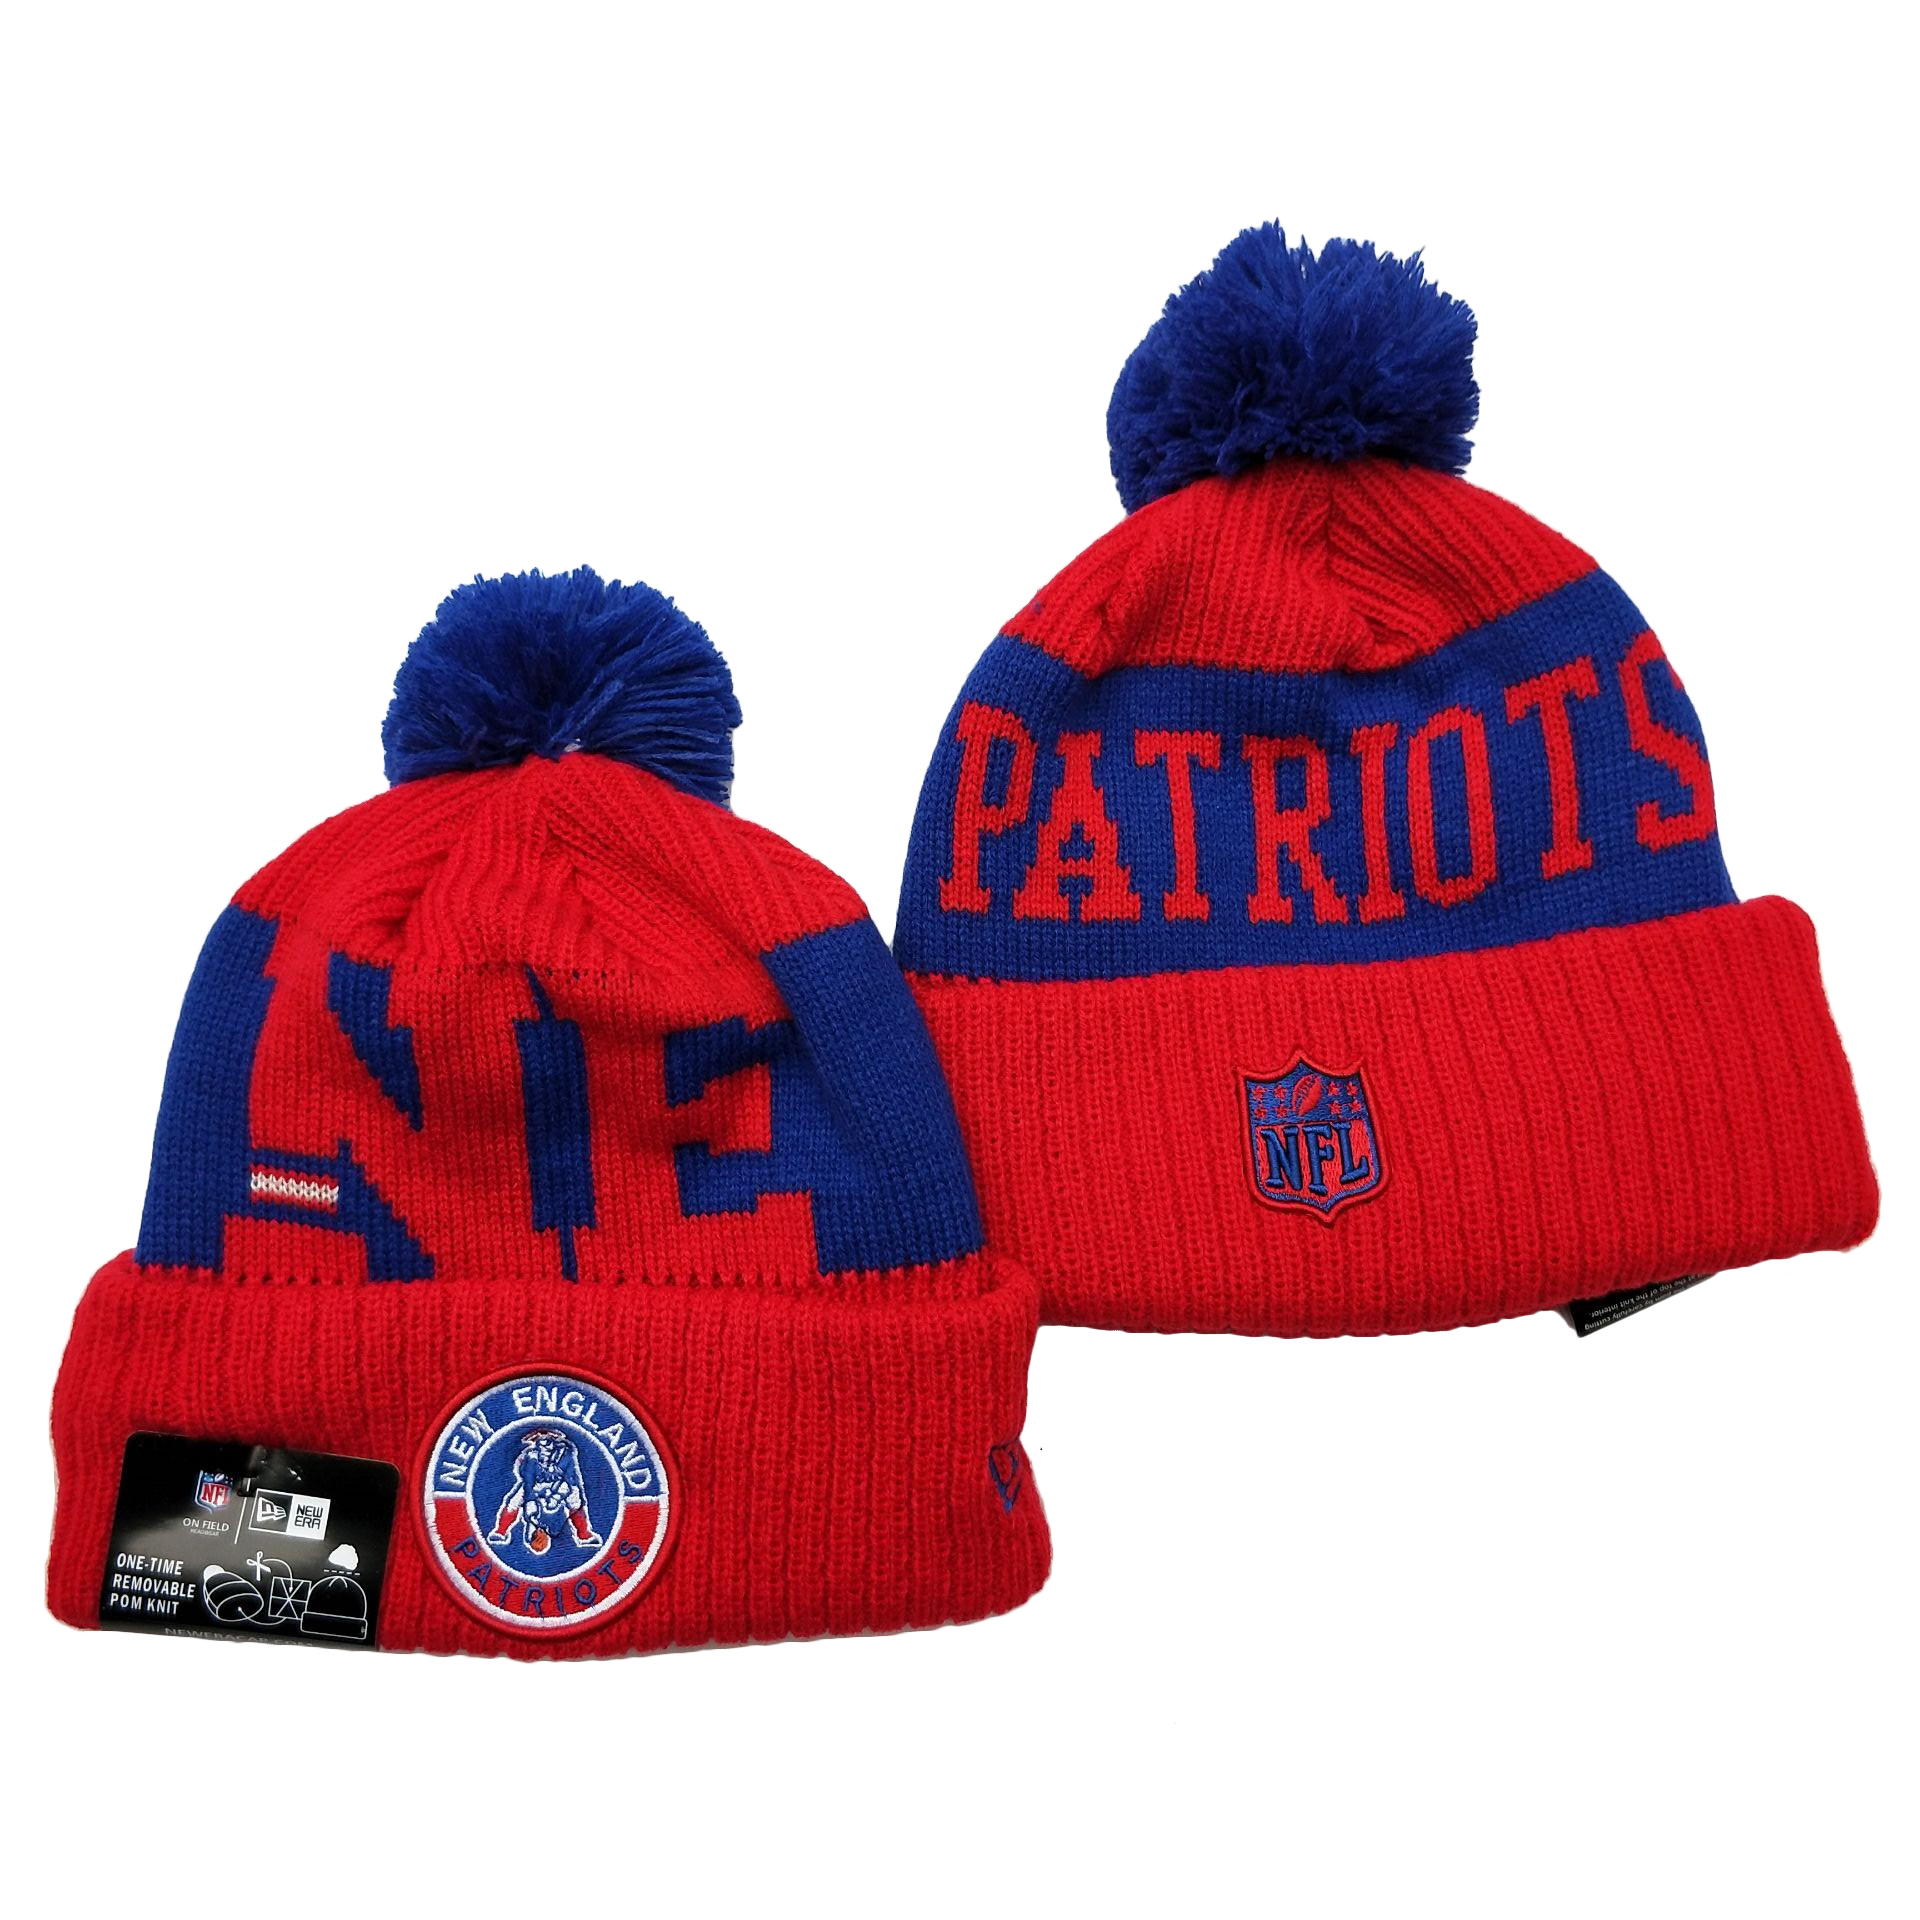 New England Patriots Knit Hats 076